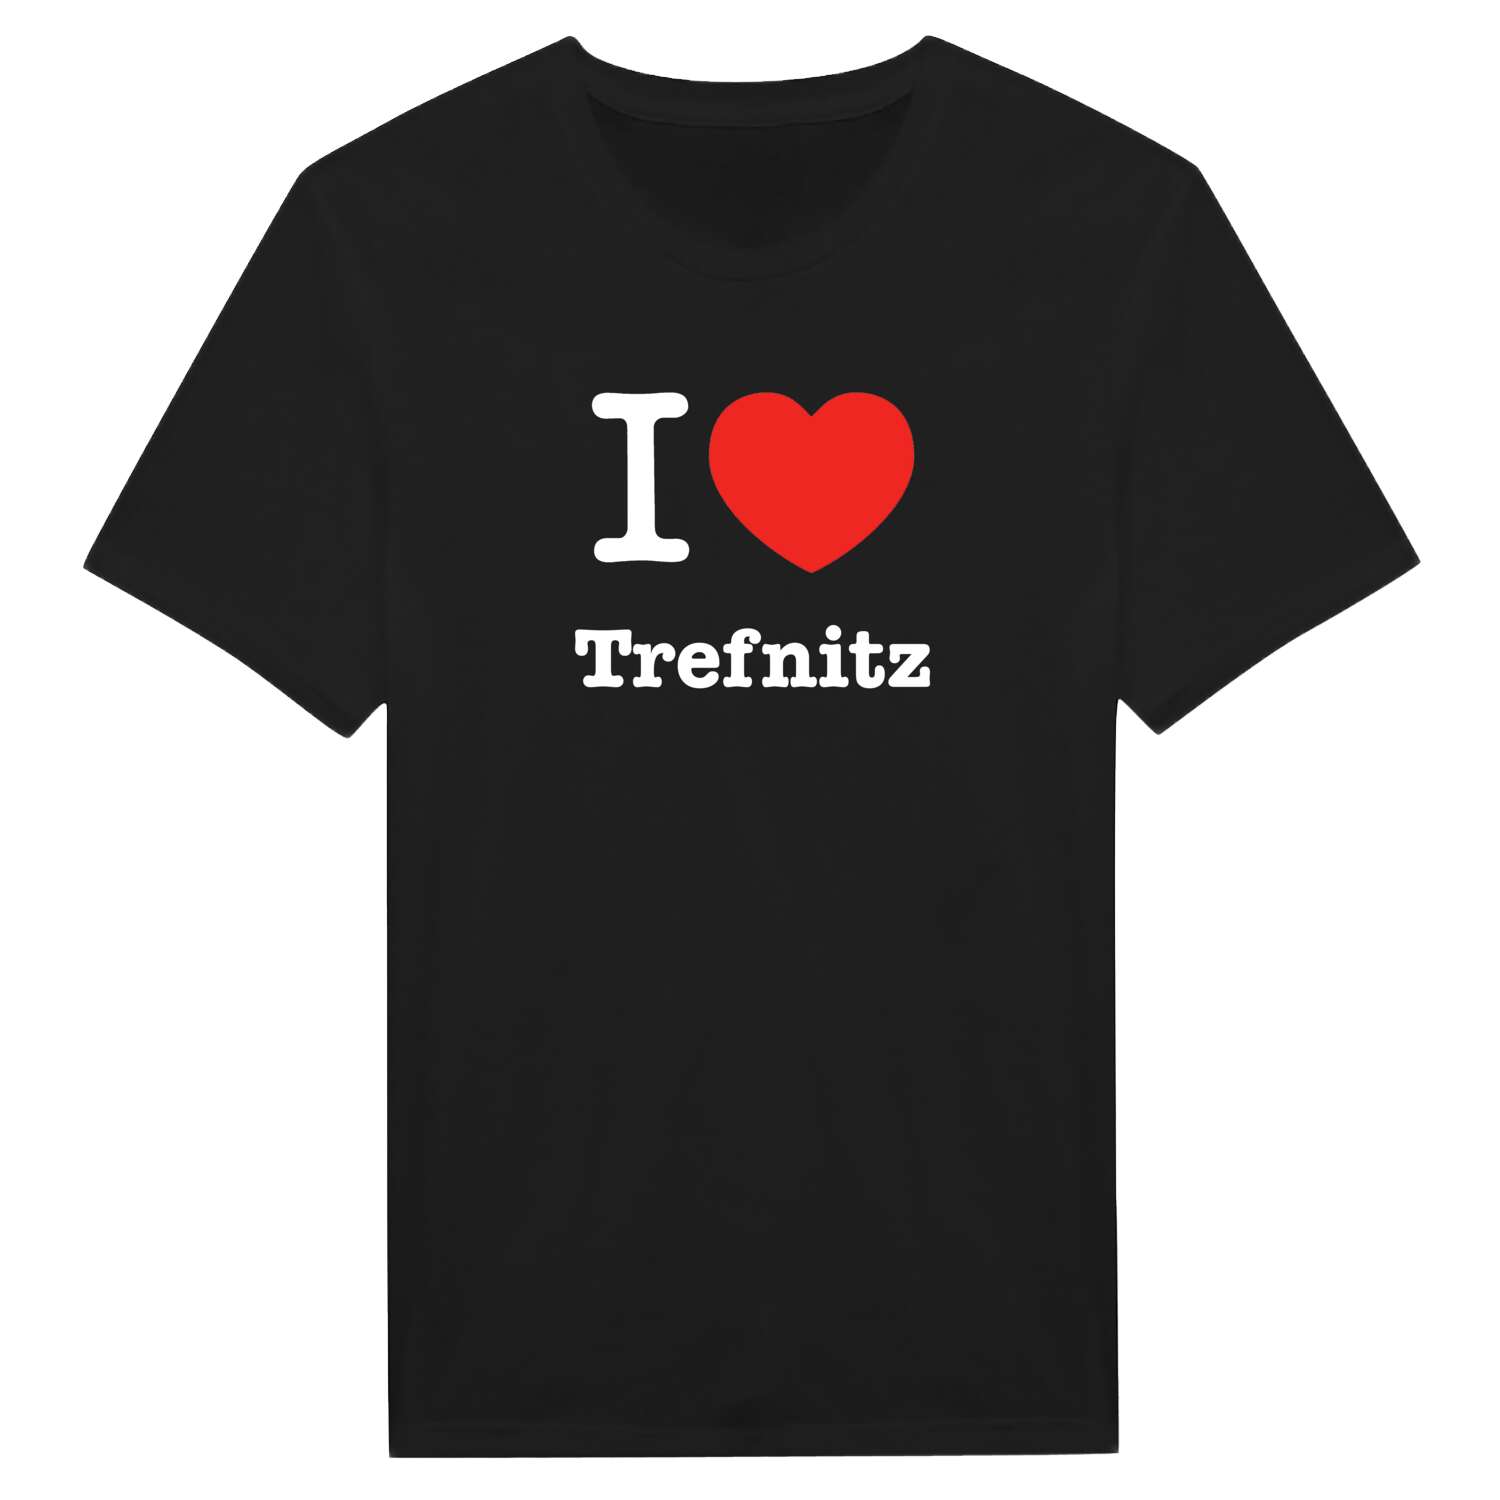 Trefnitz T-Shirt »I love«